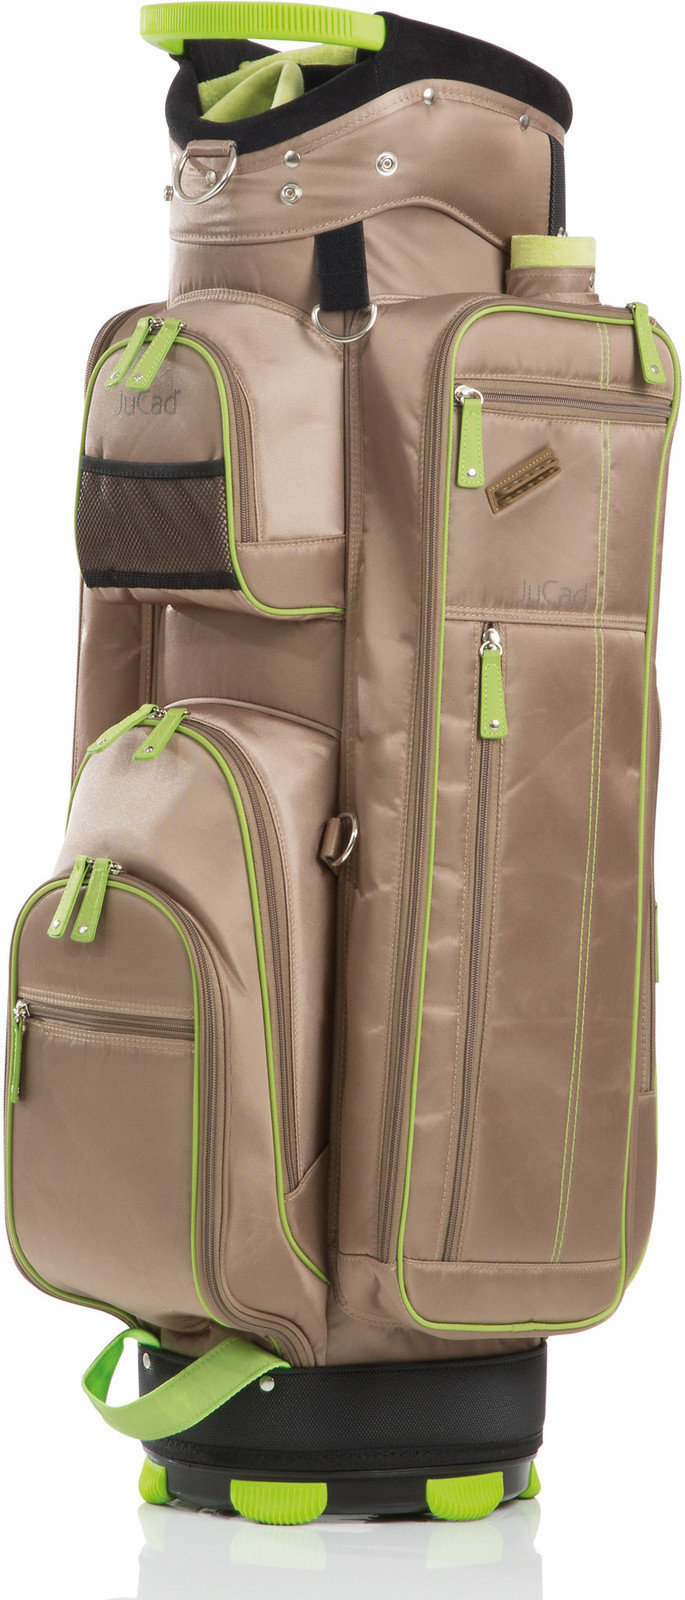 Golf Bag Jucad Function Plus Beige/Green Golf Bag